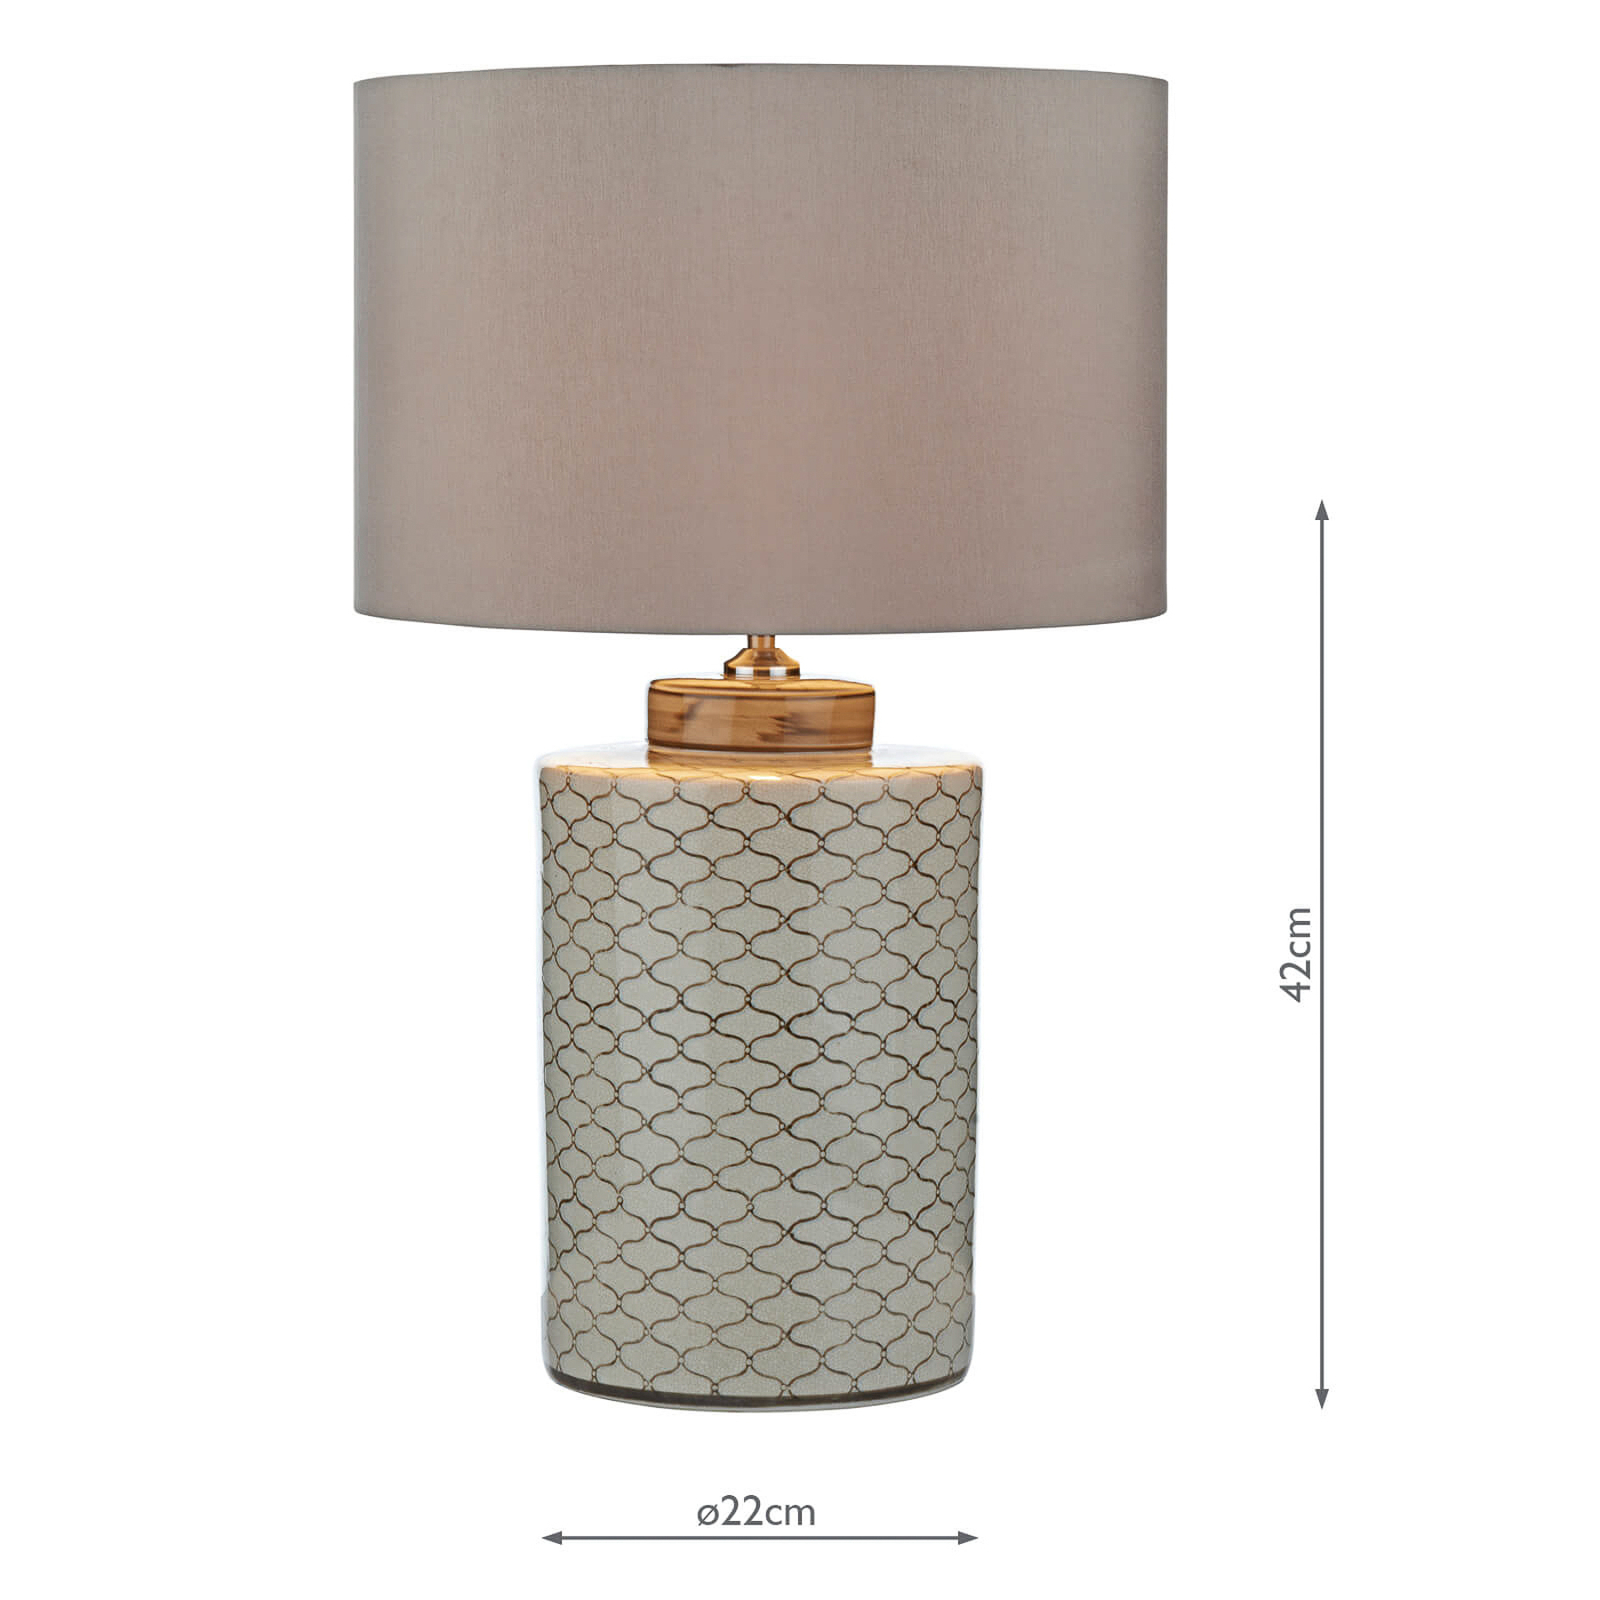 Paxton table lamp, ceramic, fabric lampshade